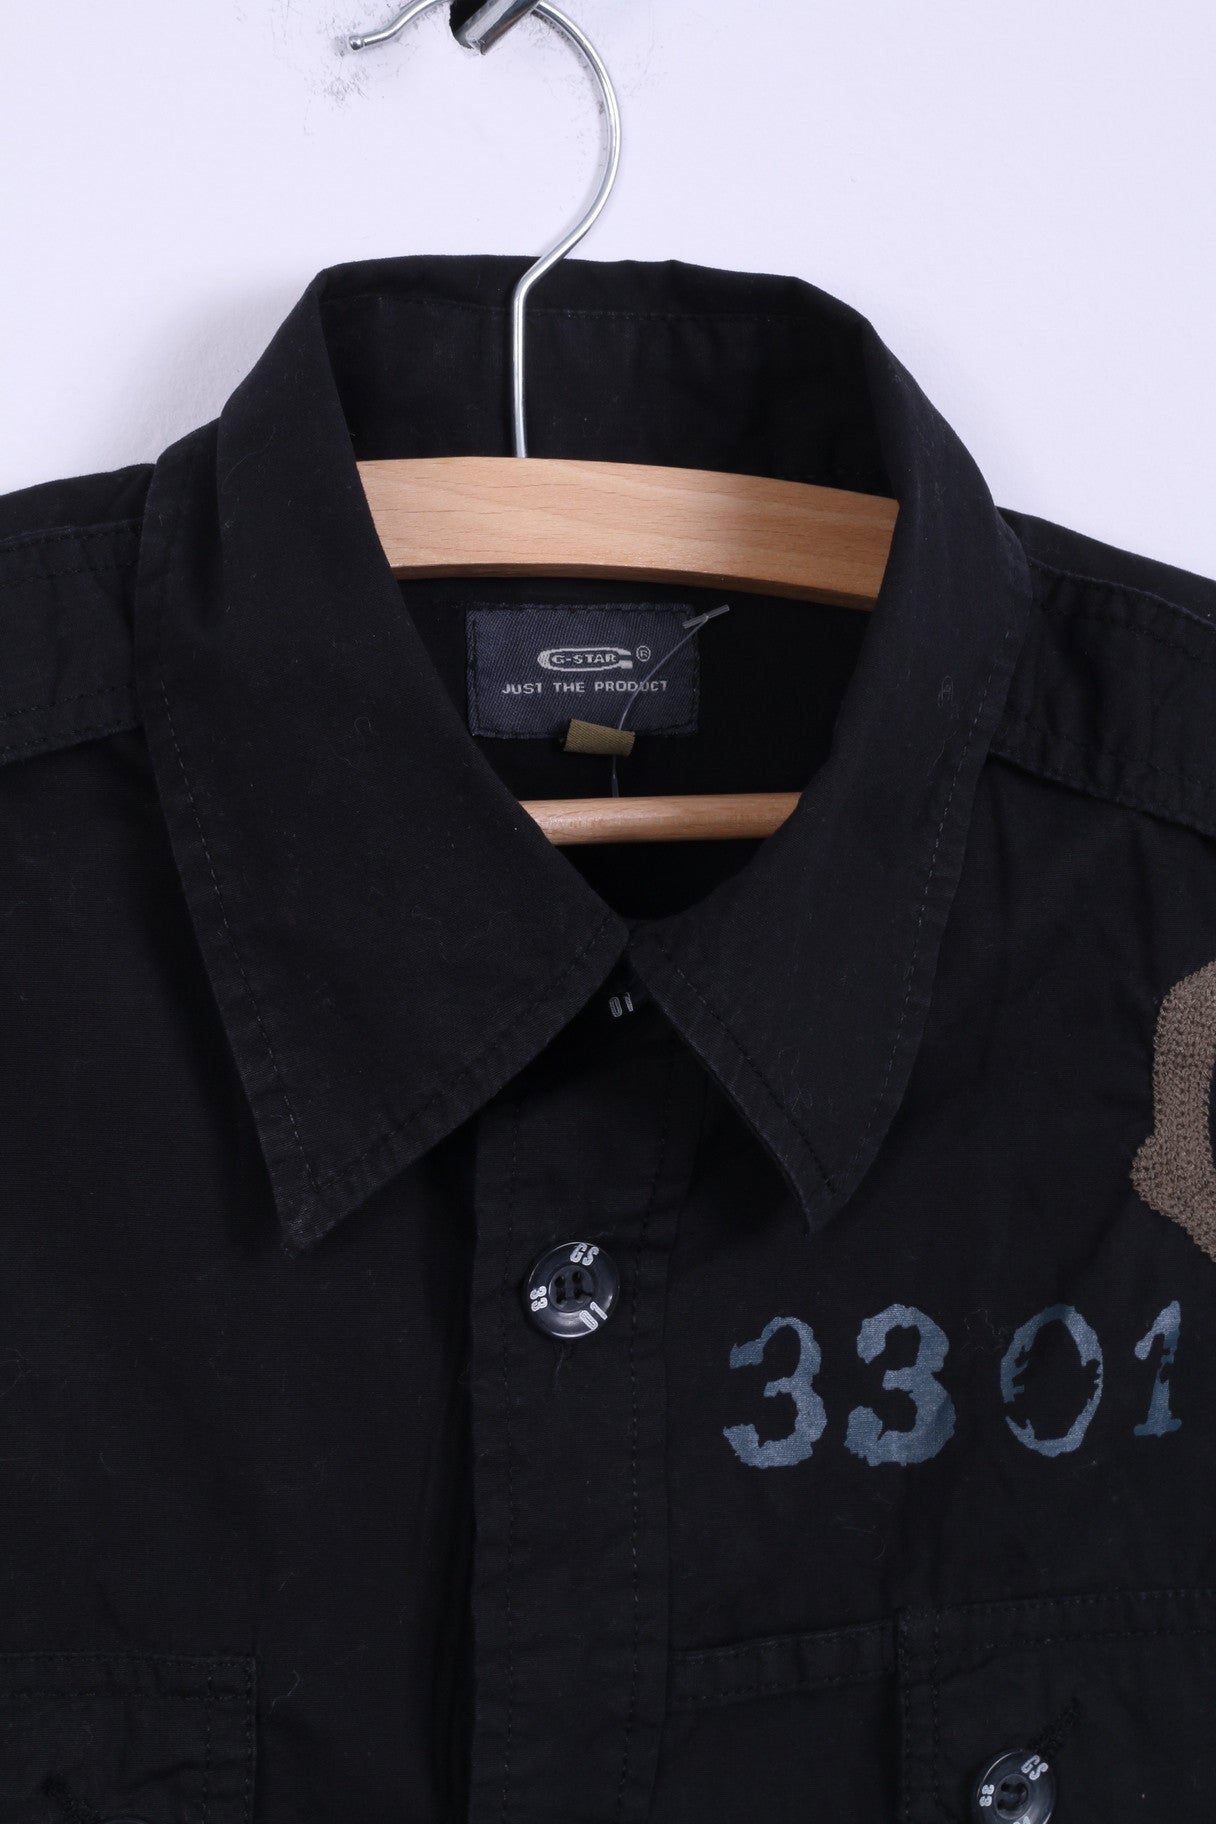 G-STAR RAW Mens L (M) Casual Shirt Cotton Black Big Buttons Two Pockets